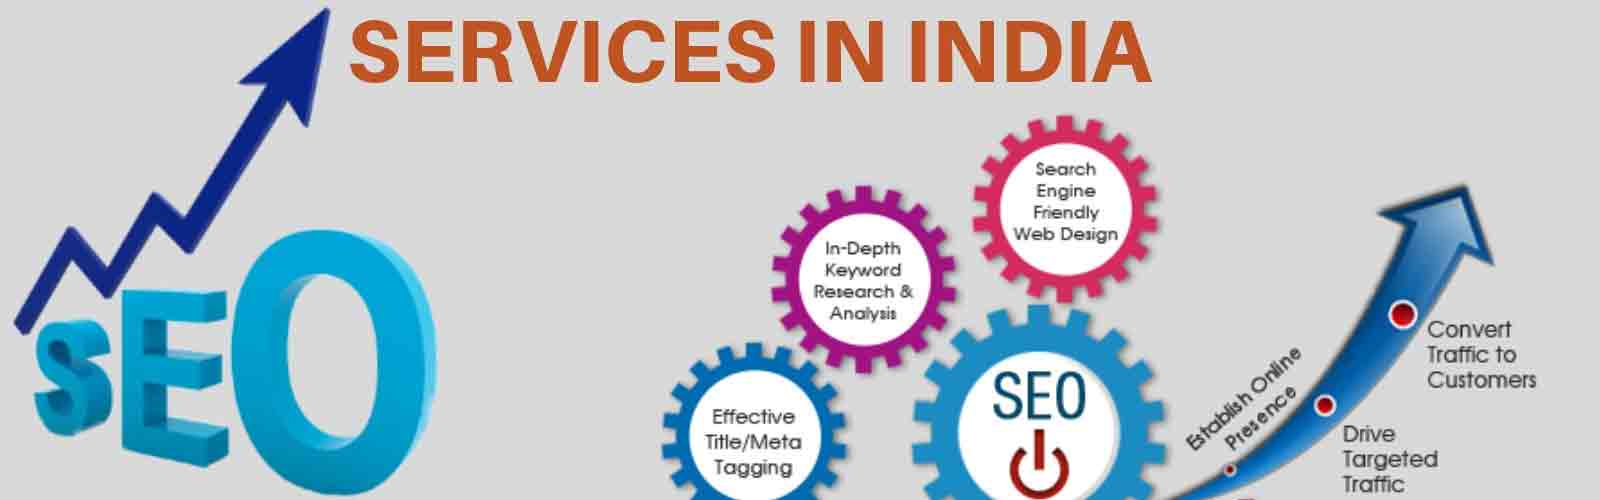 Best SEO Company India